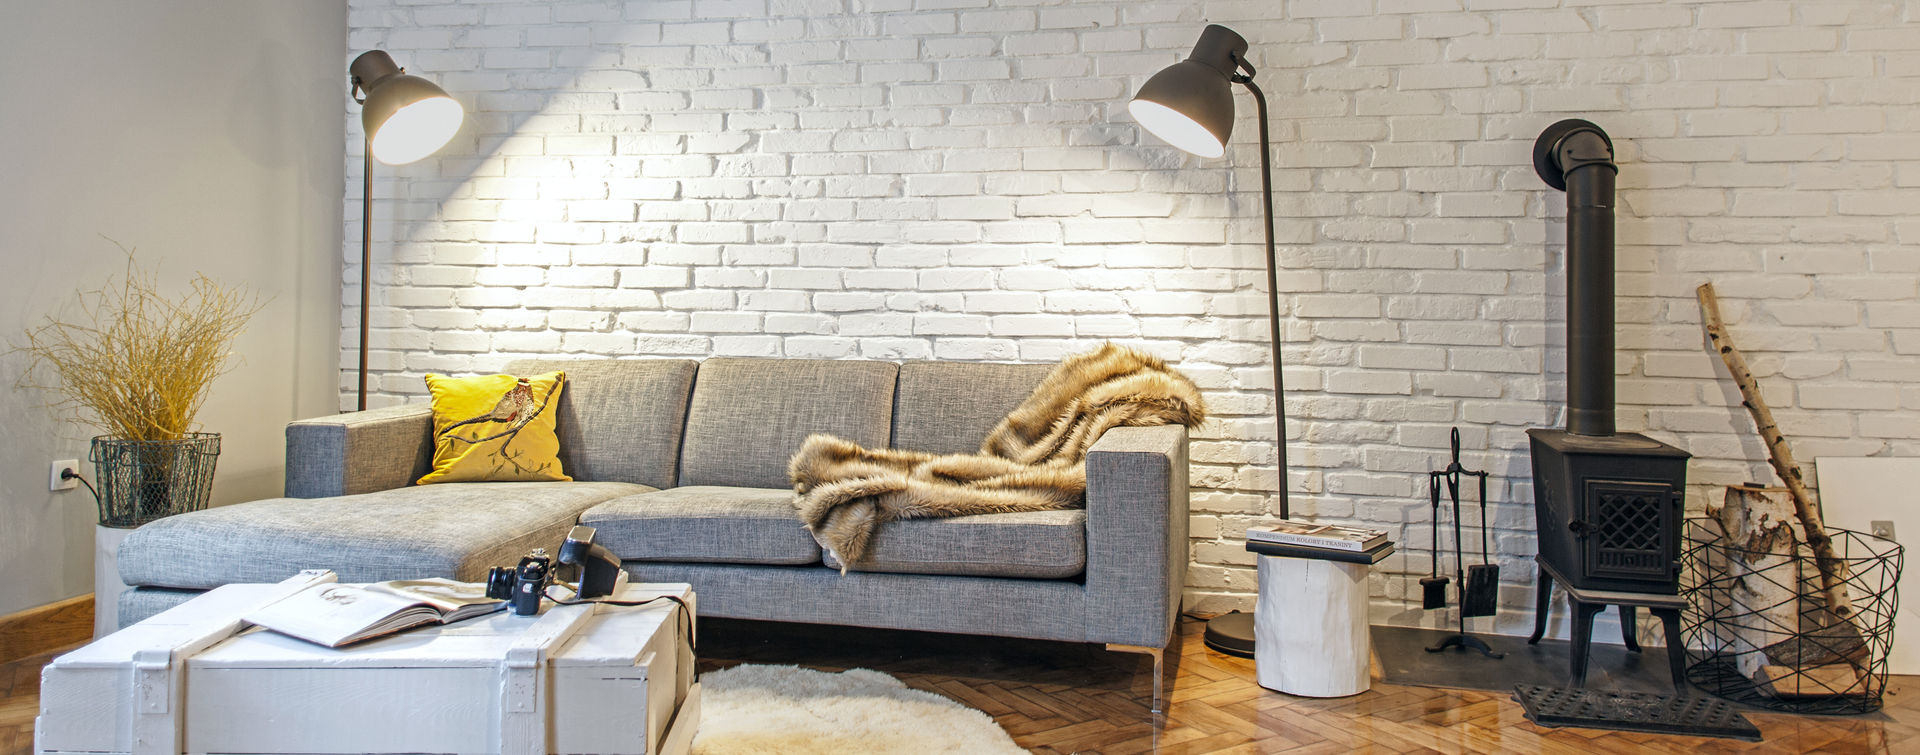 Apartament w Sopocie, DoMilimetra DoMilimetra Living room